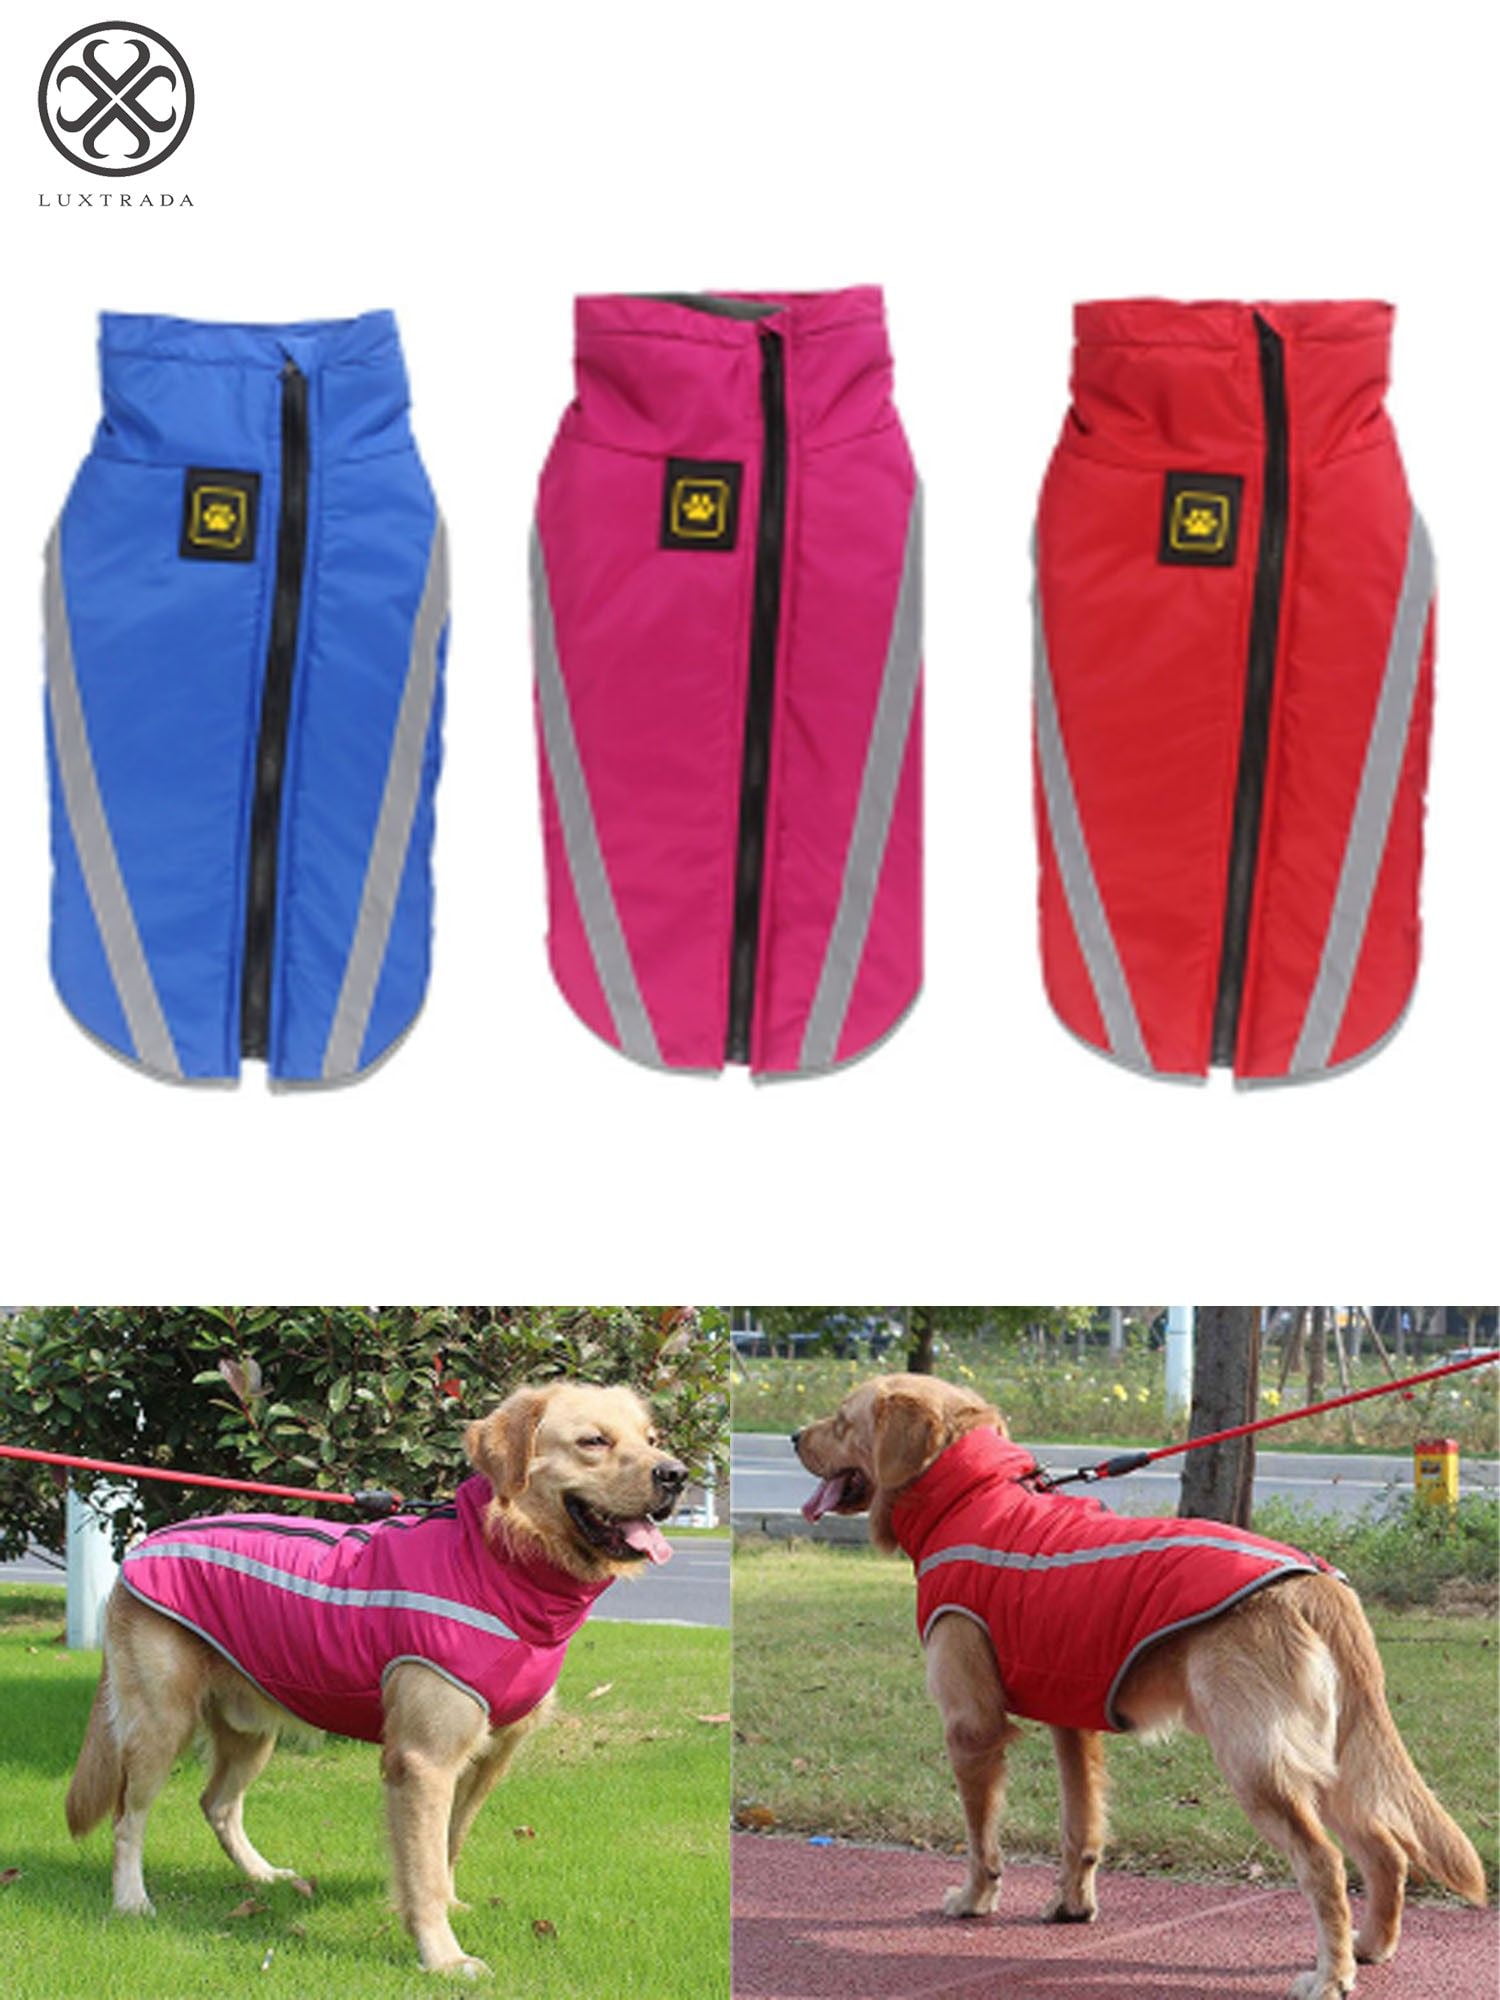 Dog Summer Cooling Vest Pet Cooling Coat Lightweight Breathable Dog Harness Jacket Soft Puppy Clothes Winter Warmer Summer Cooler Vest Jacket for Small Middle Large Dogs